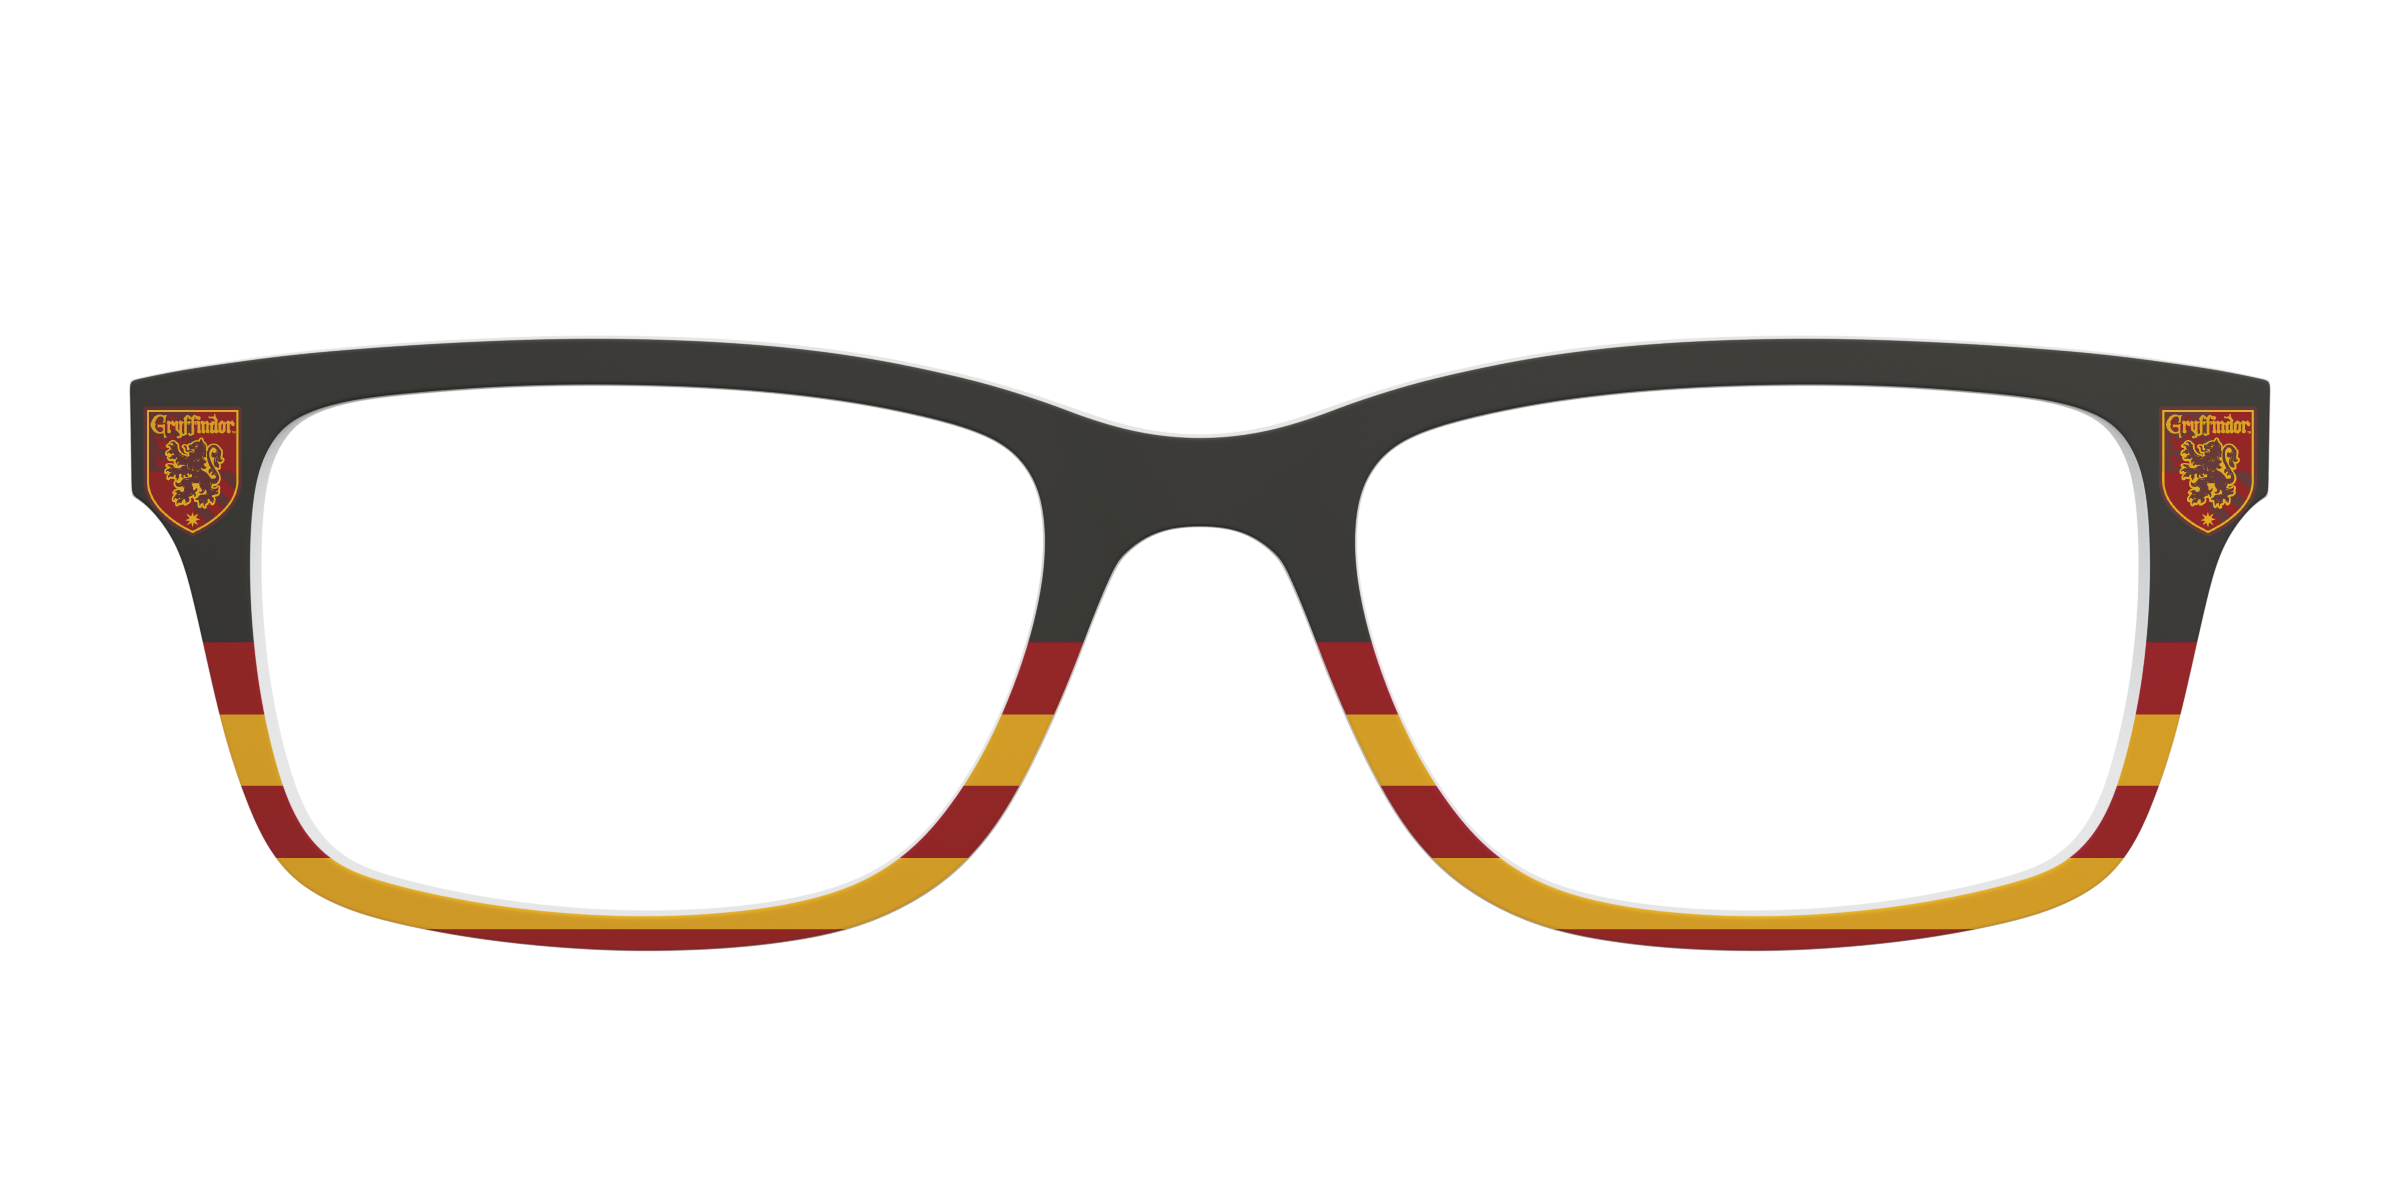 Glasses Case - Gryffindor, Harry Potter Accessories